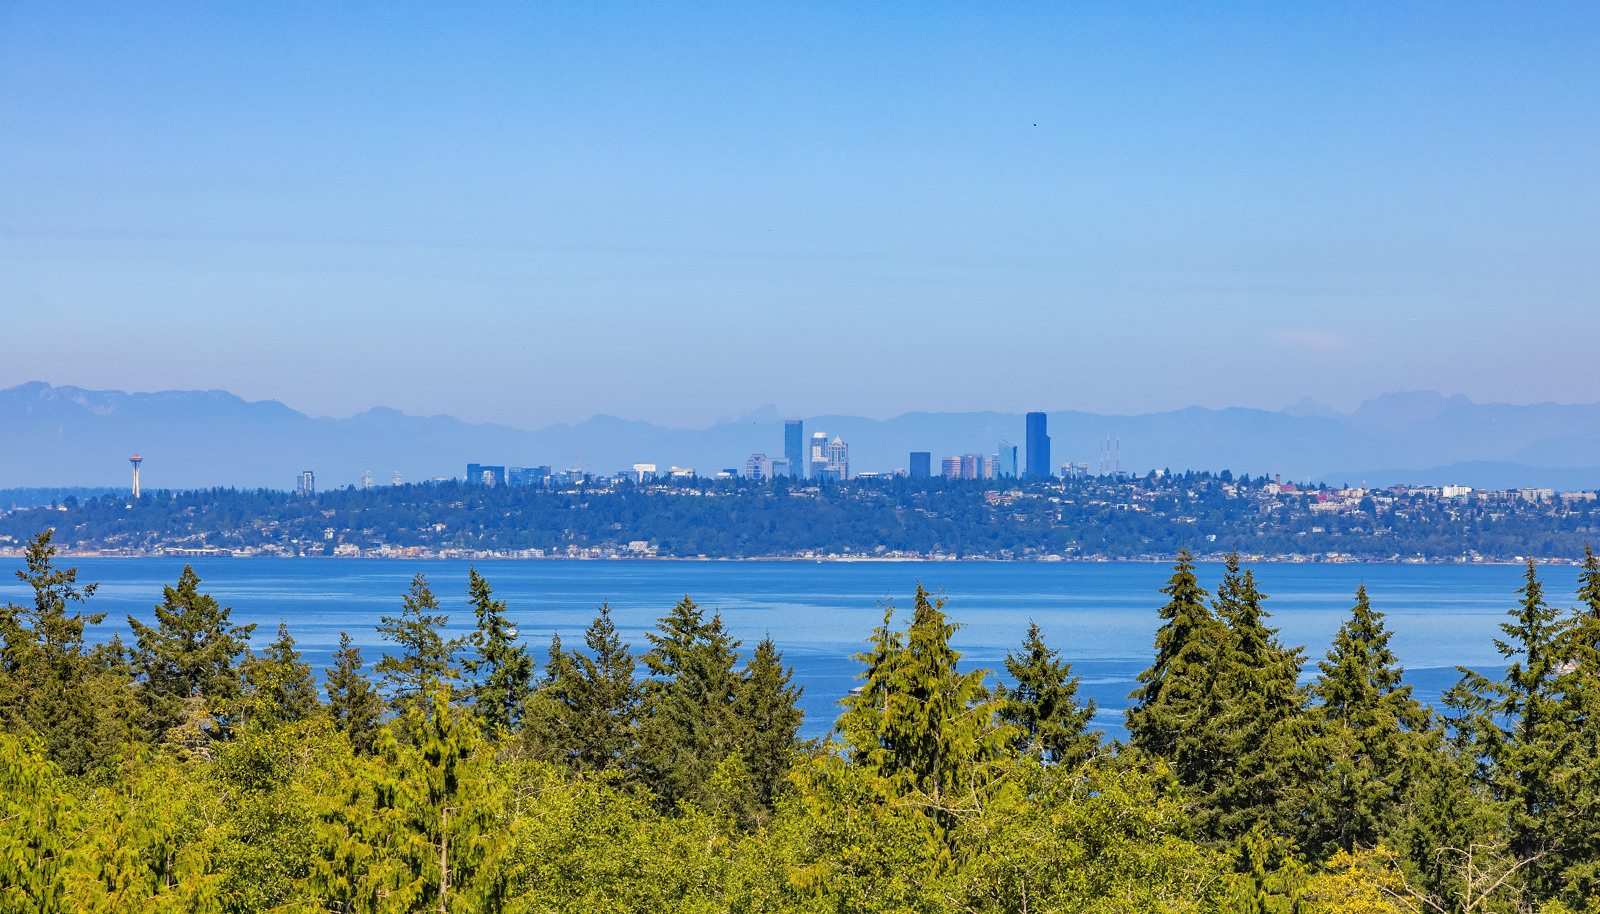 Sublime views of the Emerald City, Cascade Mountains, and deep blue Puget Sound!